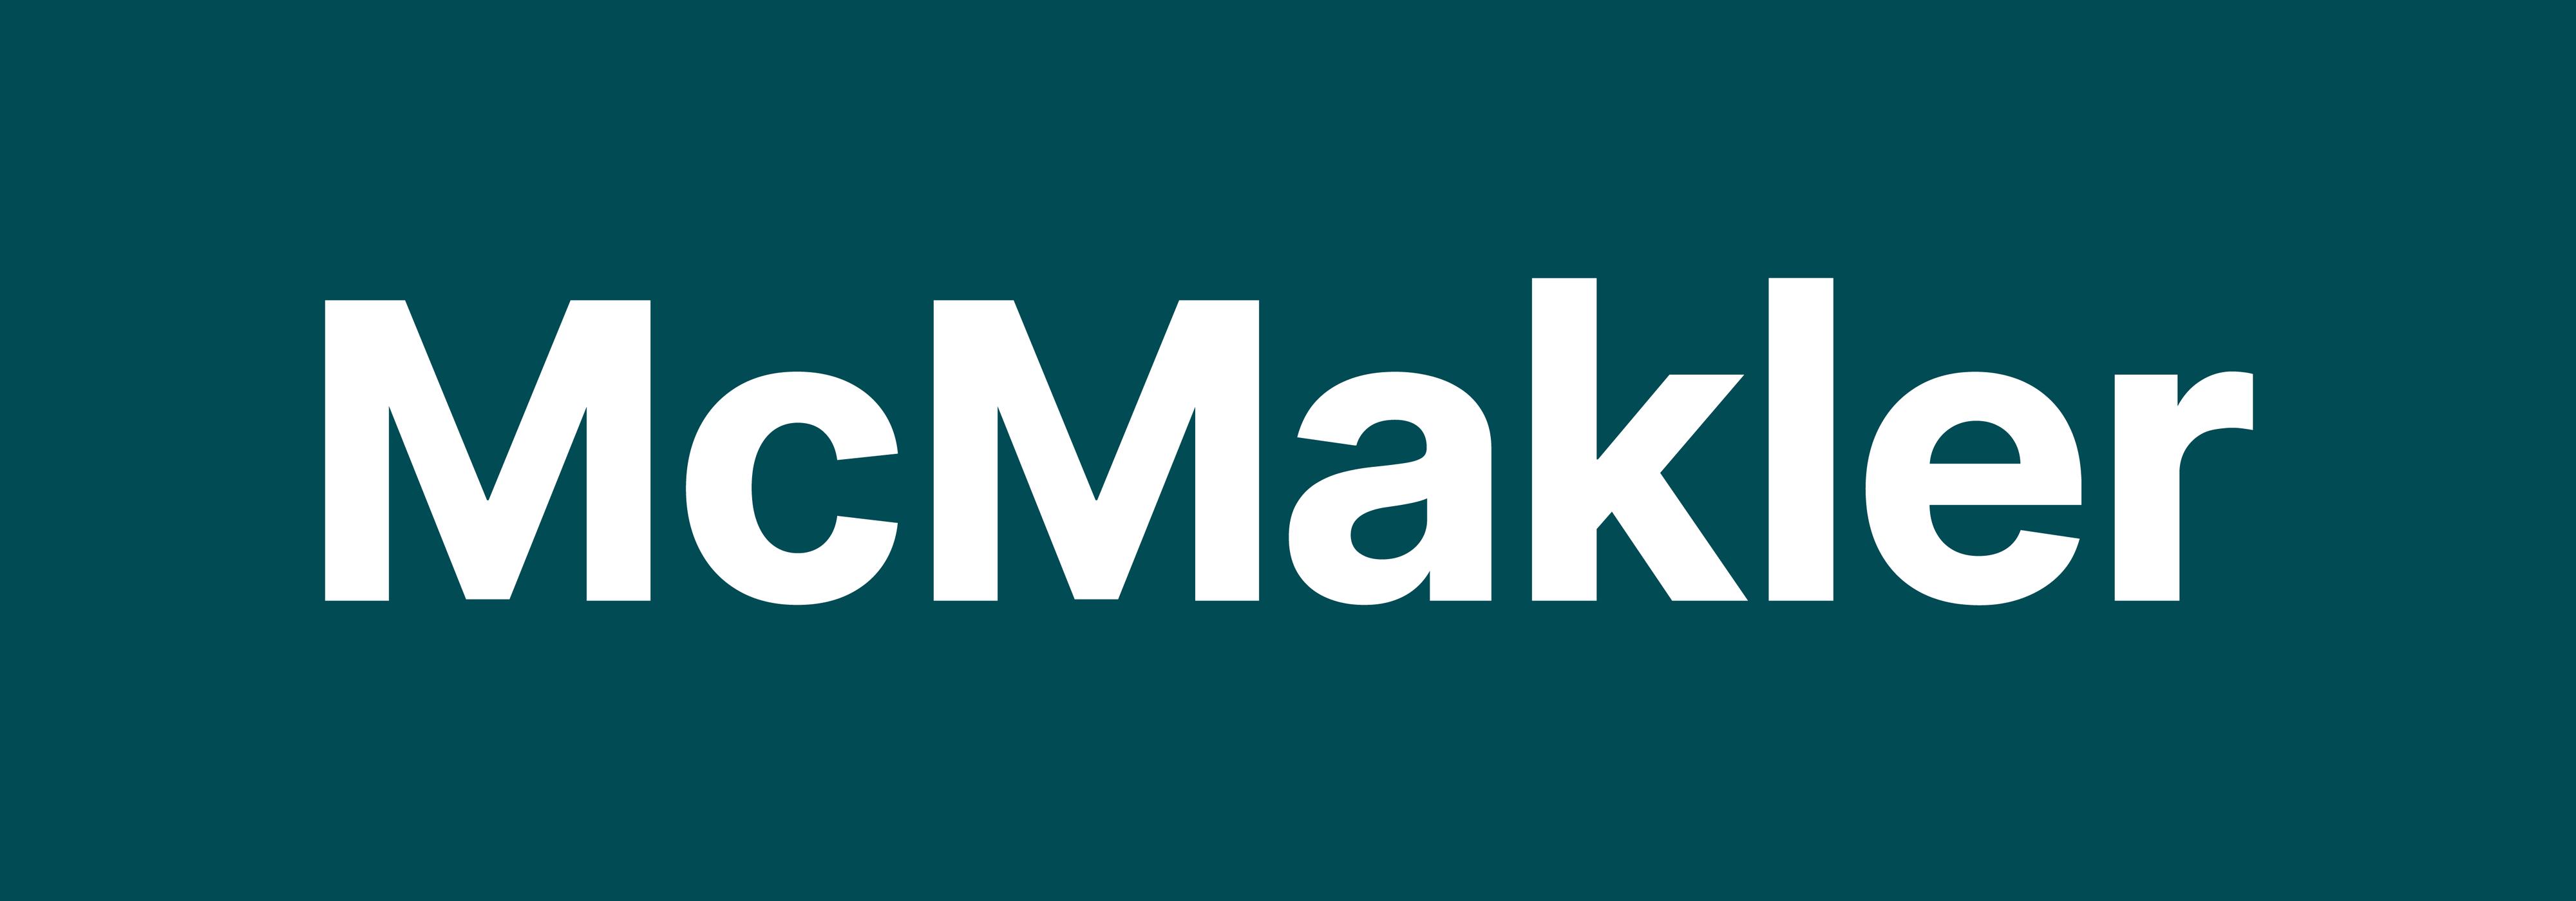 McMakler Logo White